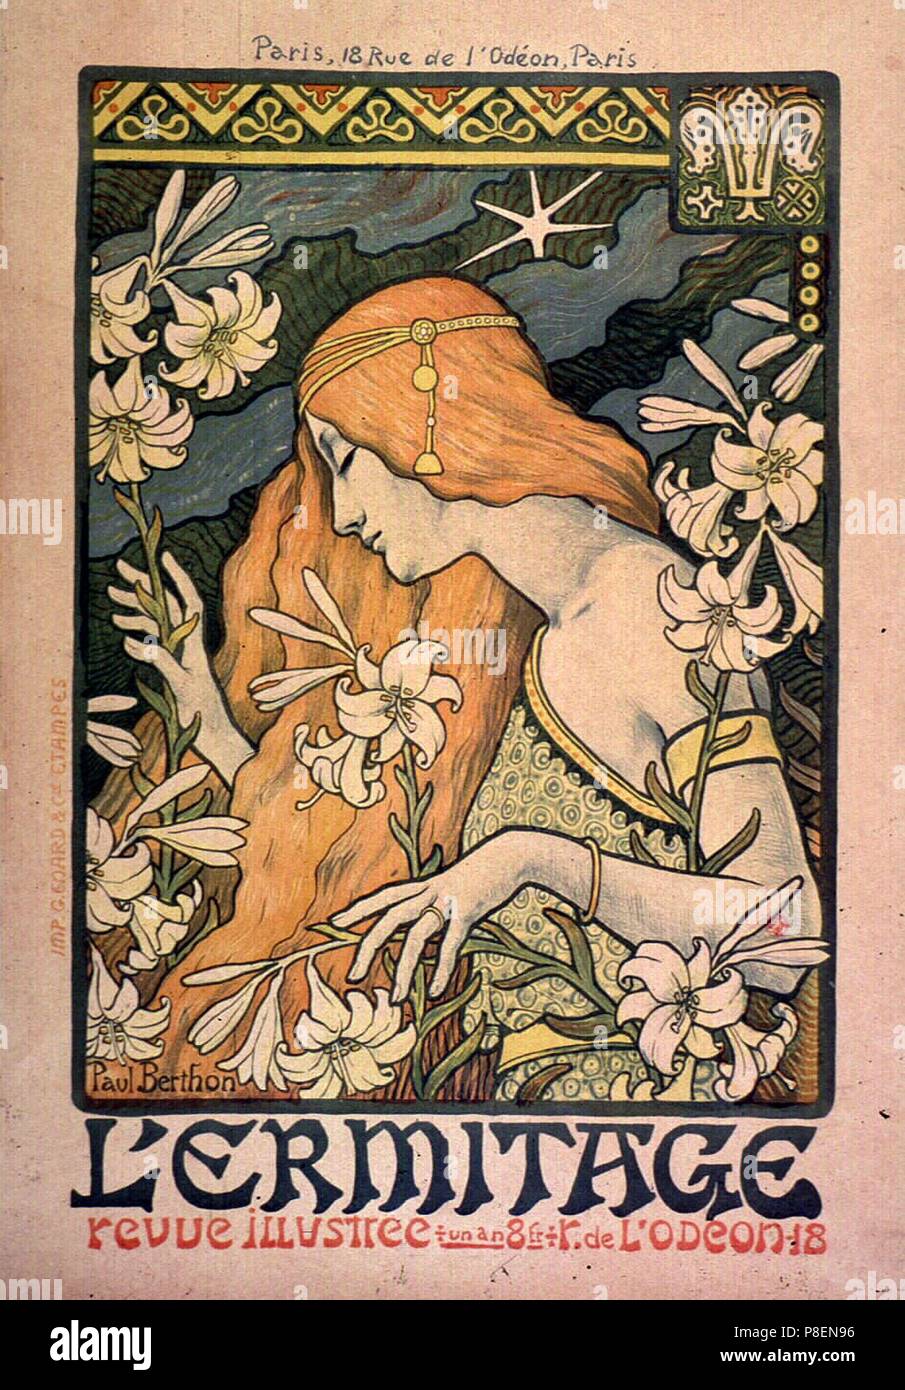 L'Ermitage, revue illustrée (Poster). Museum: PRIVATE COLLECTION. Stock Photo